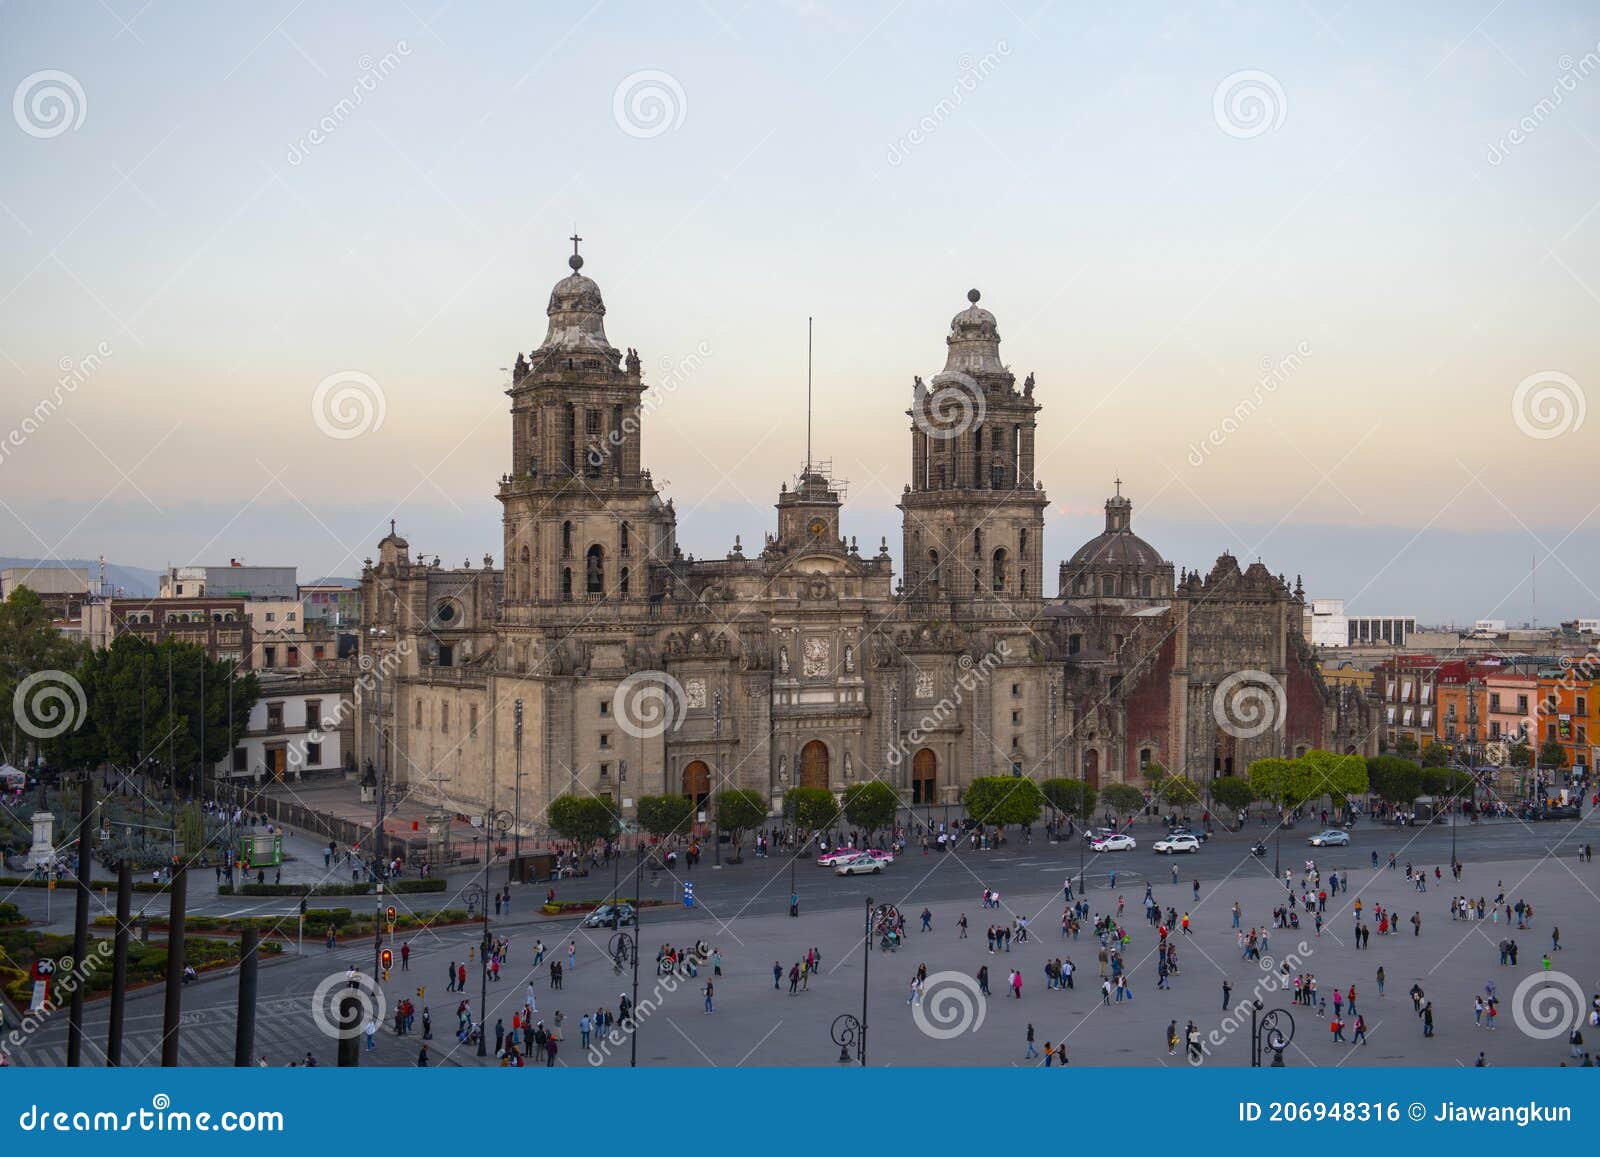 metropolitan cathedral in mexico city, mexico